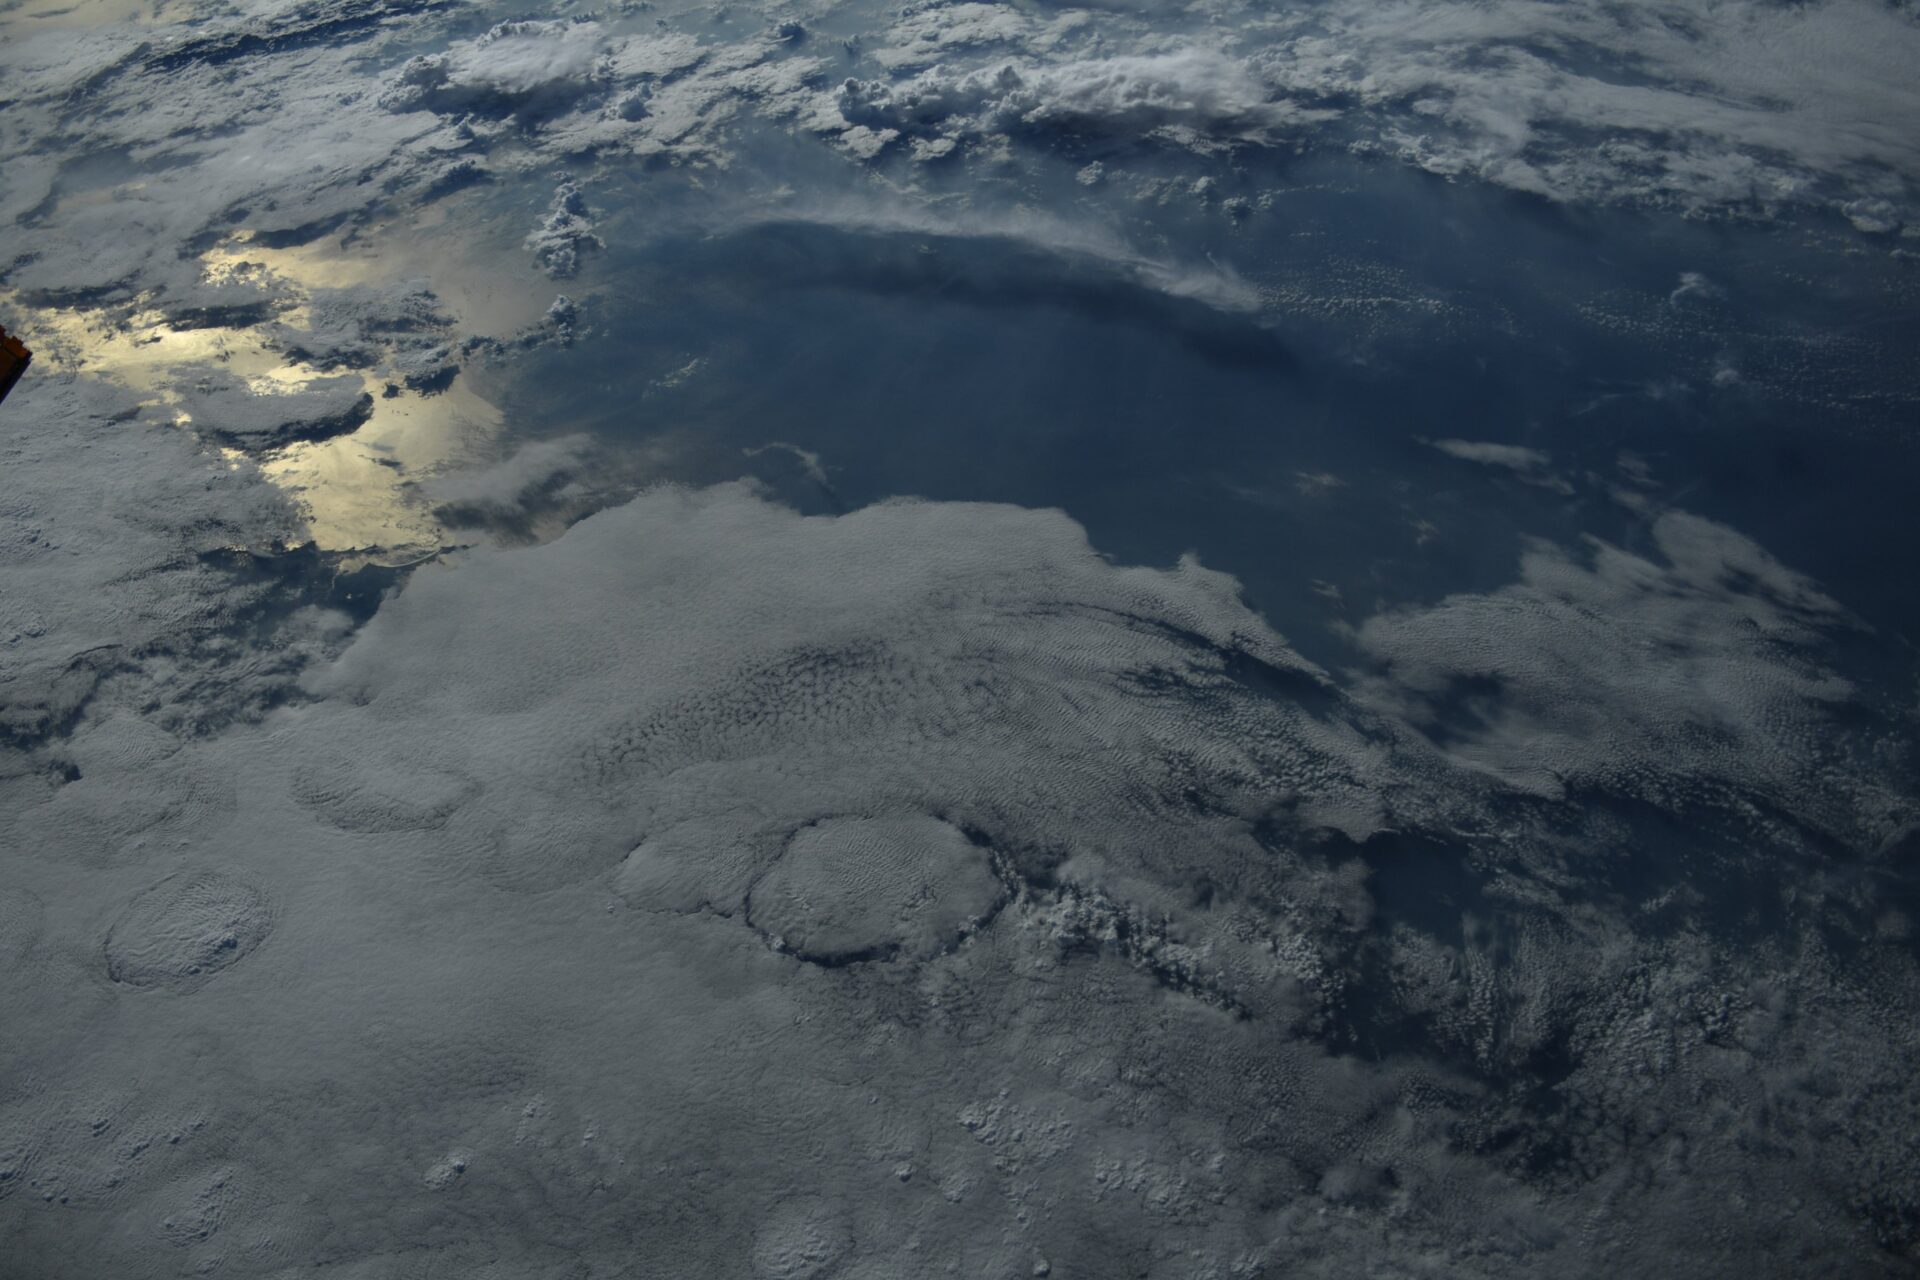 Снимок поверхности Земли под песню Луи Армстронга What a Wonderful World